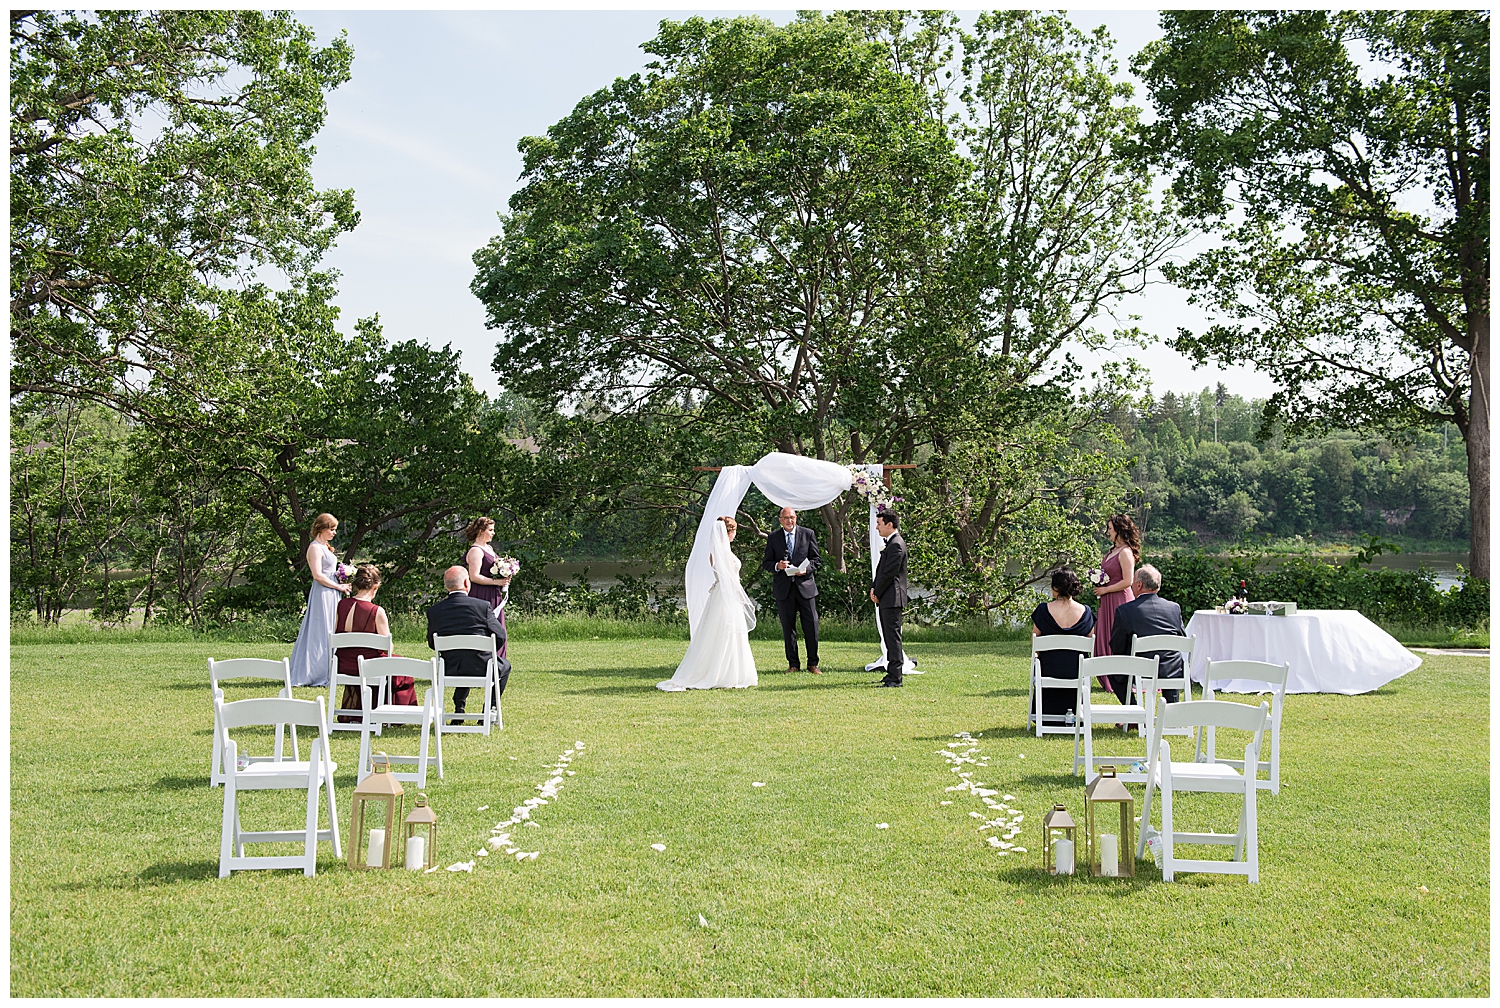 Galt country club outdoor wedding ceremony